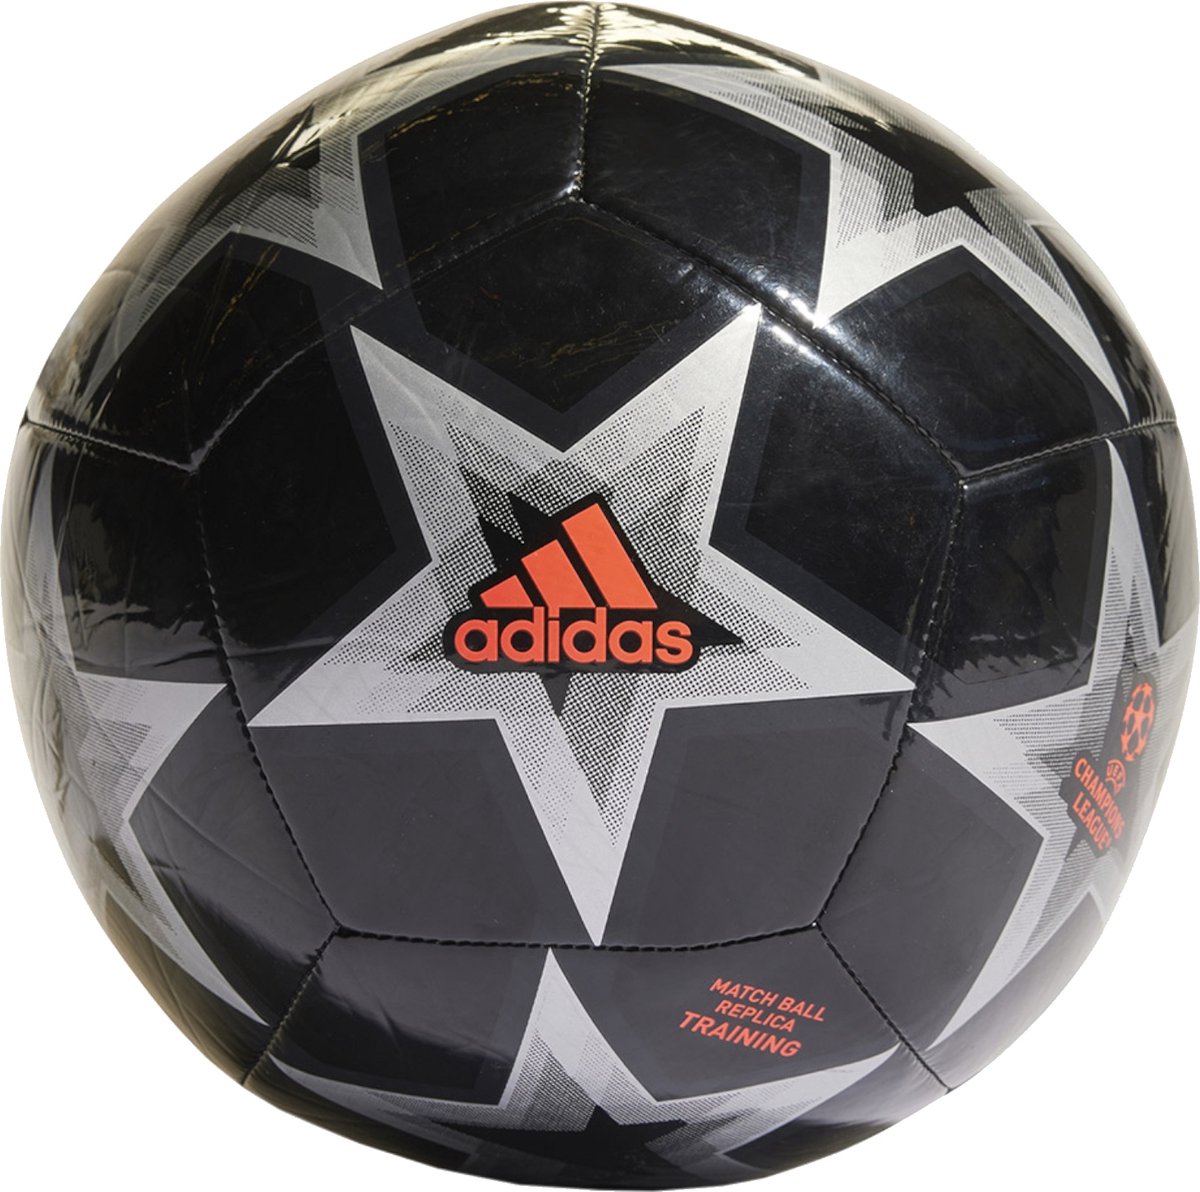 Adidas voetbal Champions League CLB - maat 5 - zwart/zilver